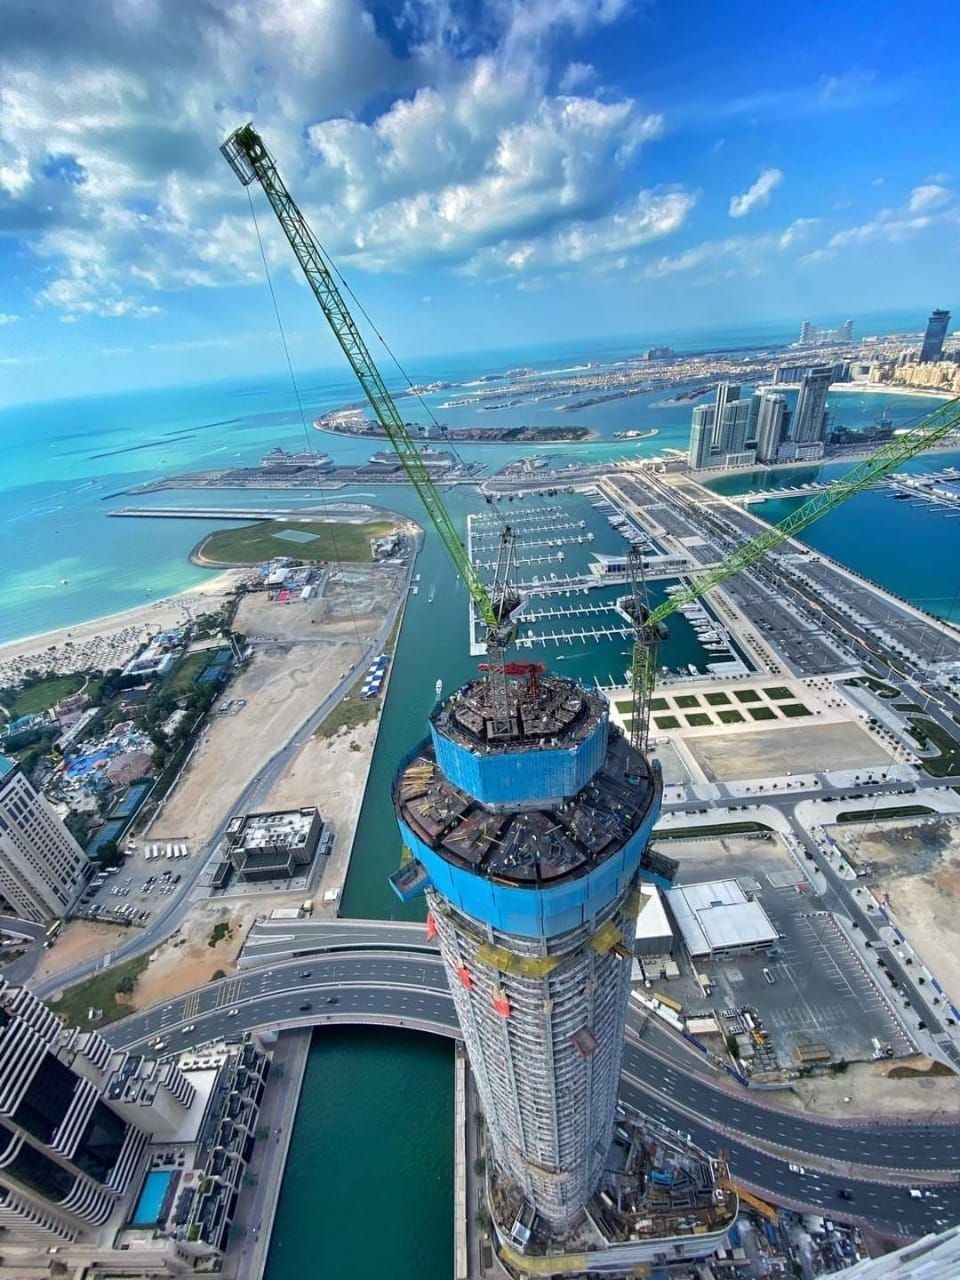 Ciel tower under construction in Dubai